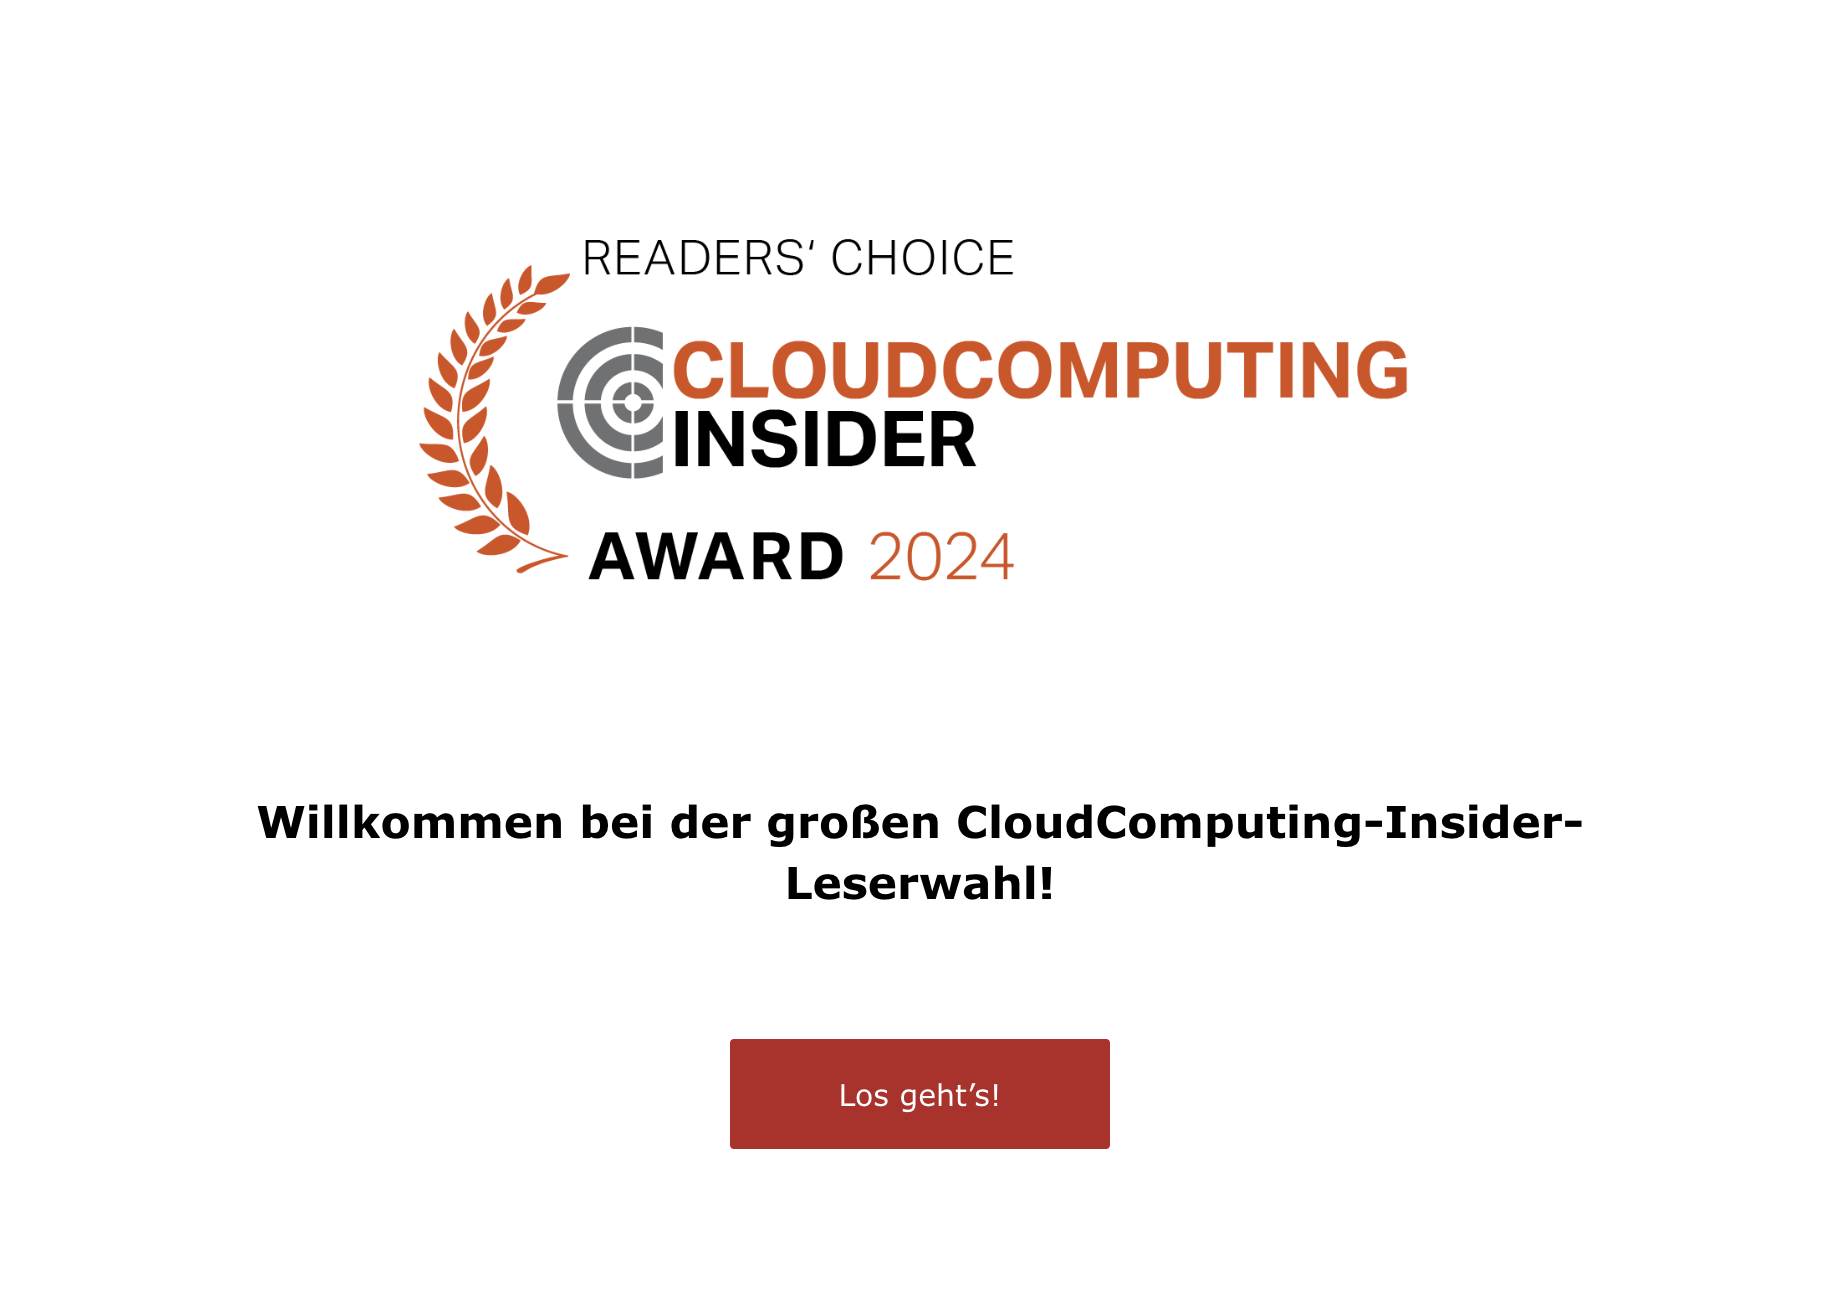 CloudComputing-Insider Award - how to vote - begin